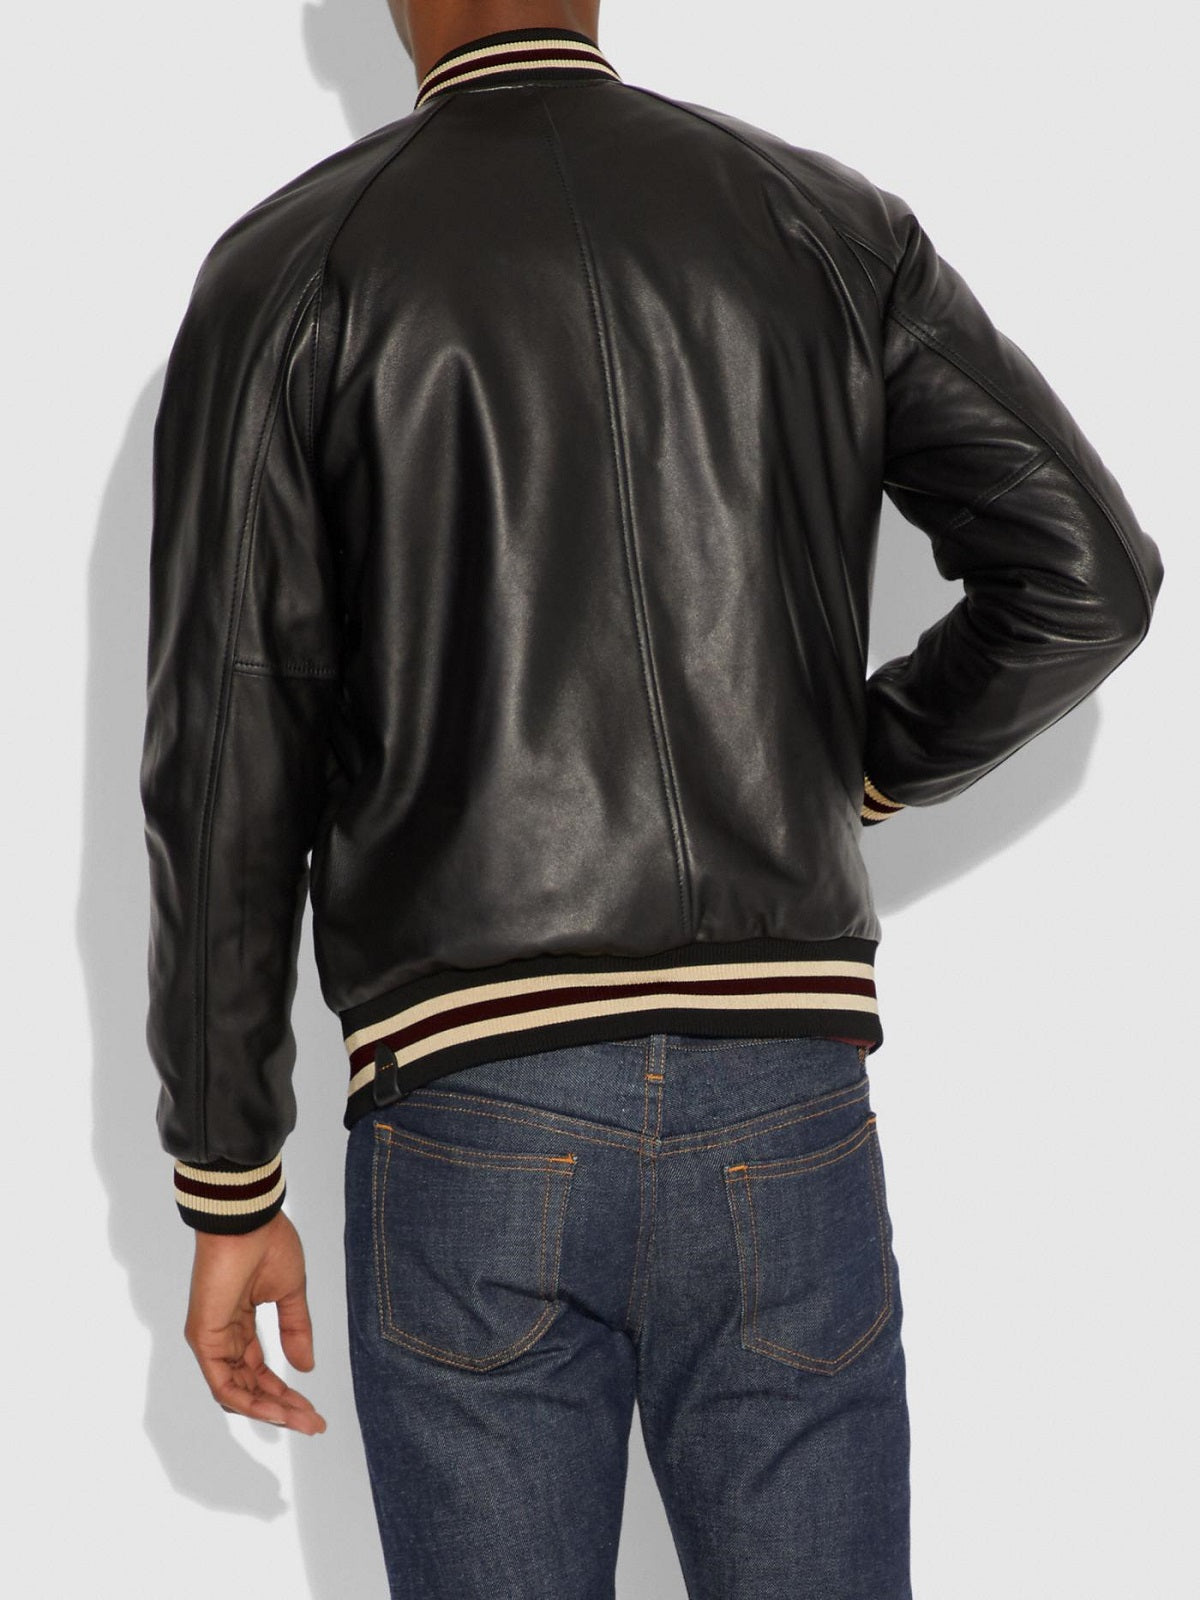 black varsity jacket mens Archives - Leather Baba Blog